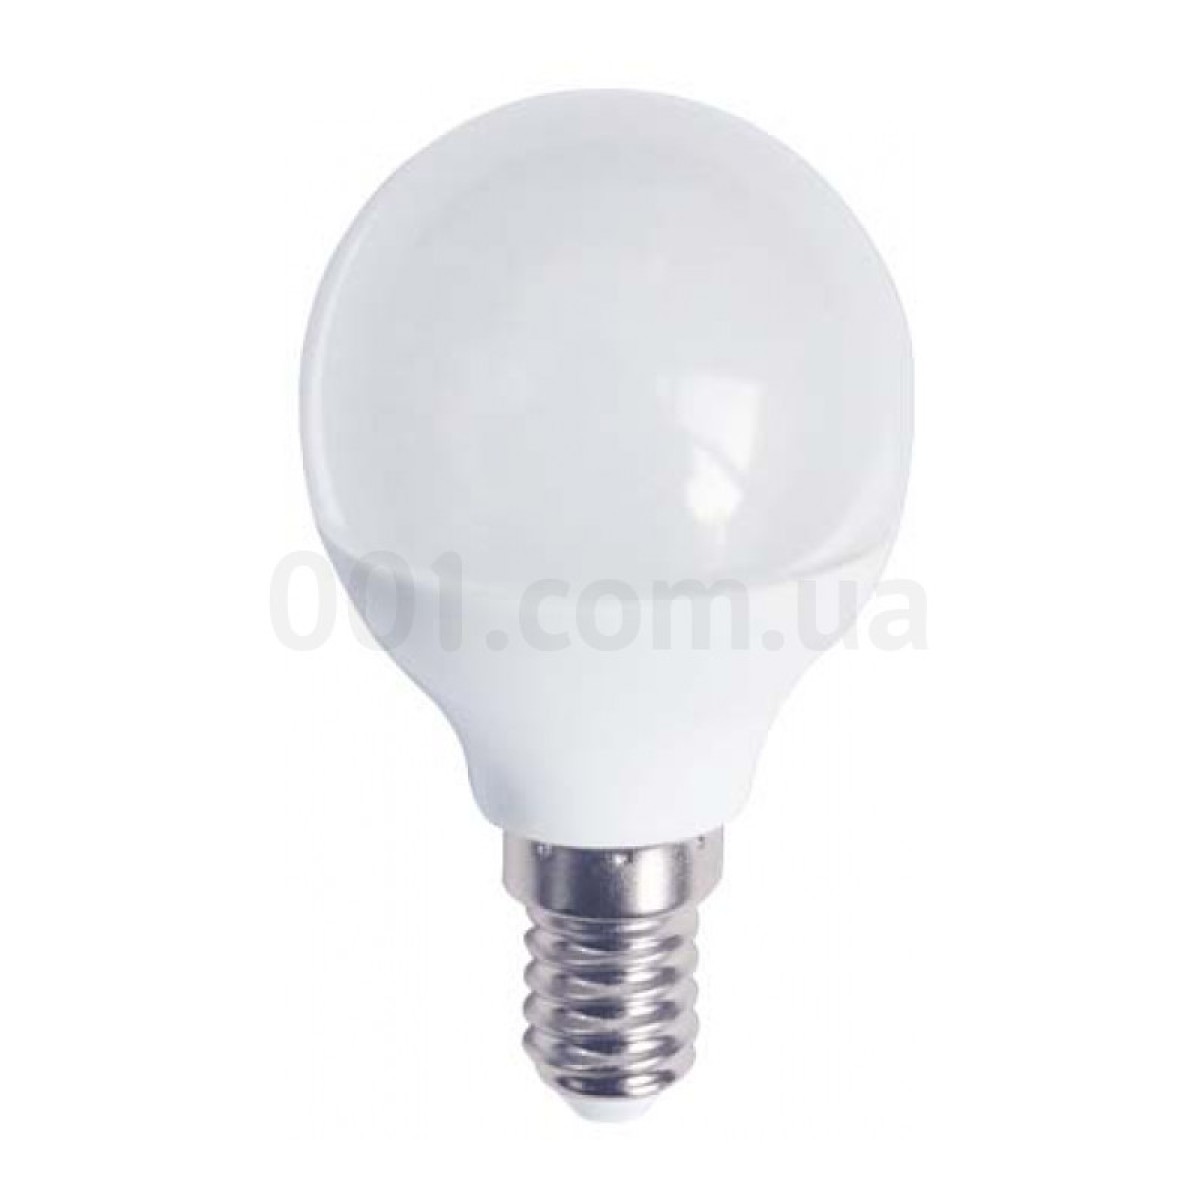 Светодиодная лампа LB-745 P45 (шар) 6Вт 2700K E14, Feron 98_98.jpg